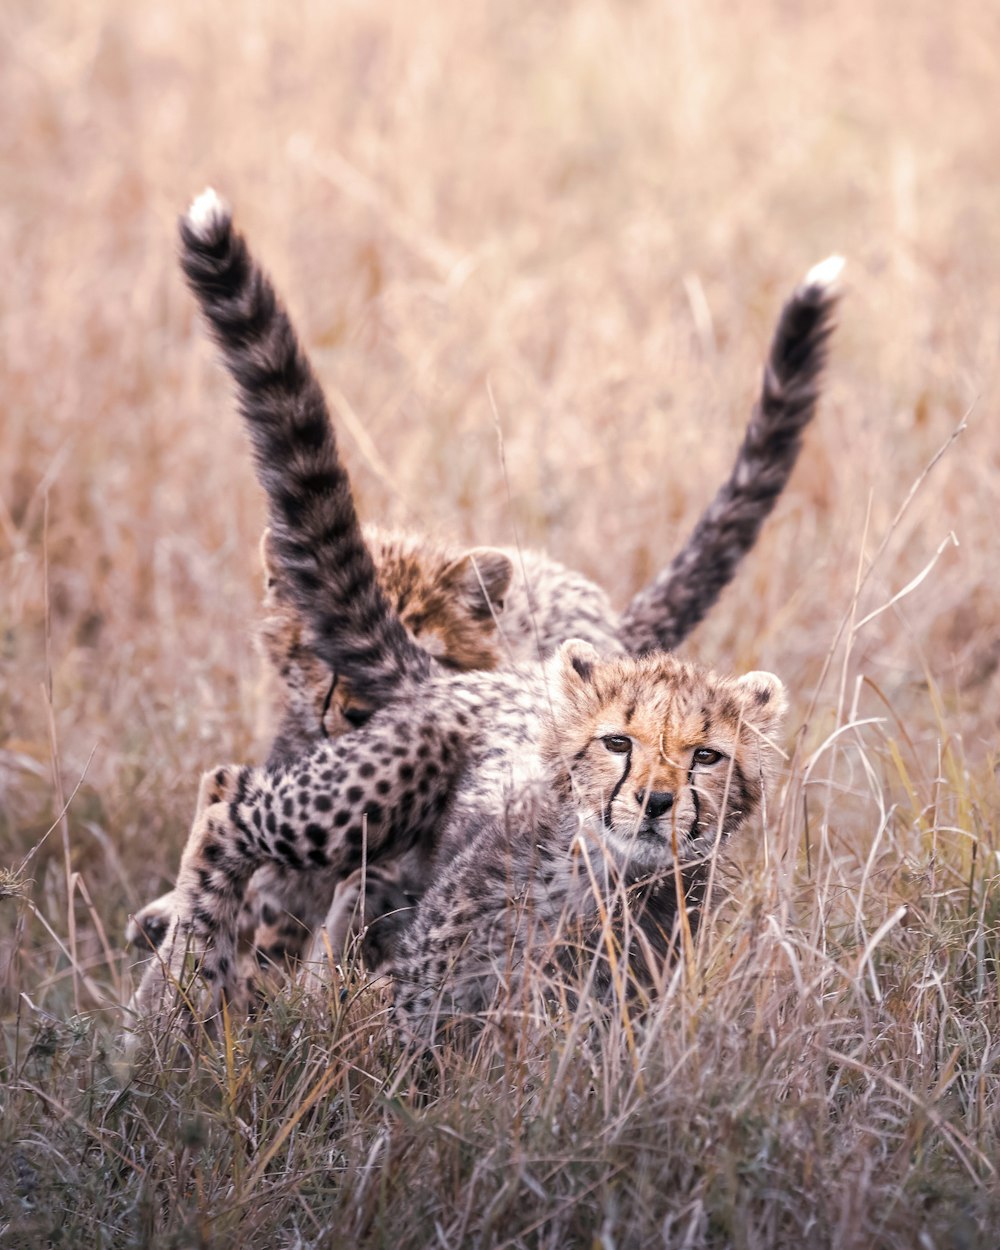 cheetah on brown grass field during daytime